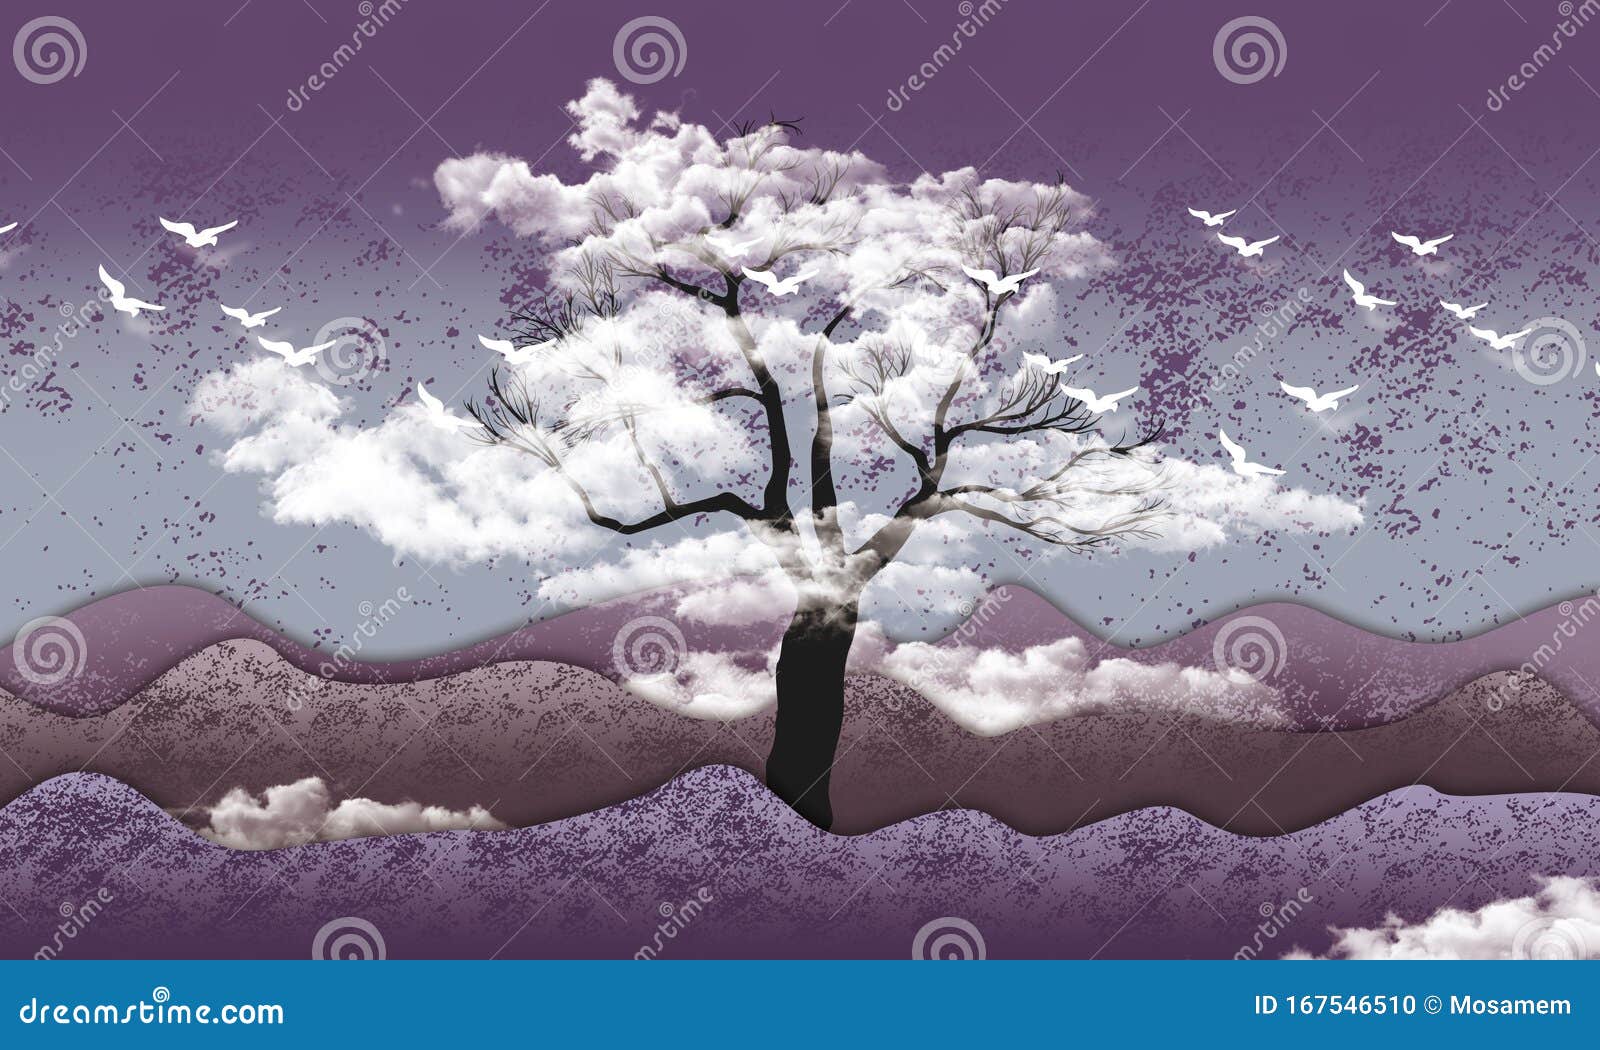 3d Mural Wallpaper 山 天上白鸟 云中黑树淡紫色背景库存例证 插画包括有